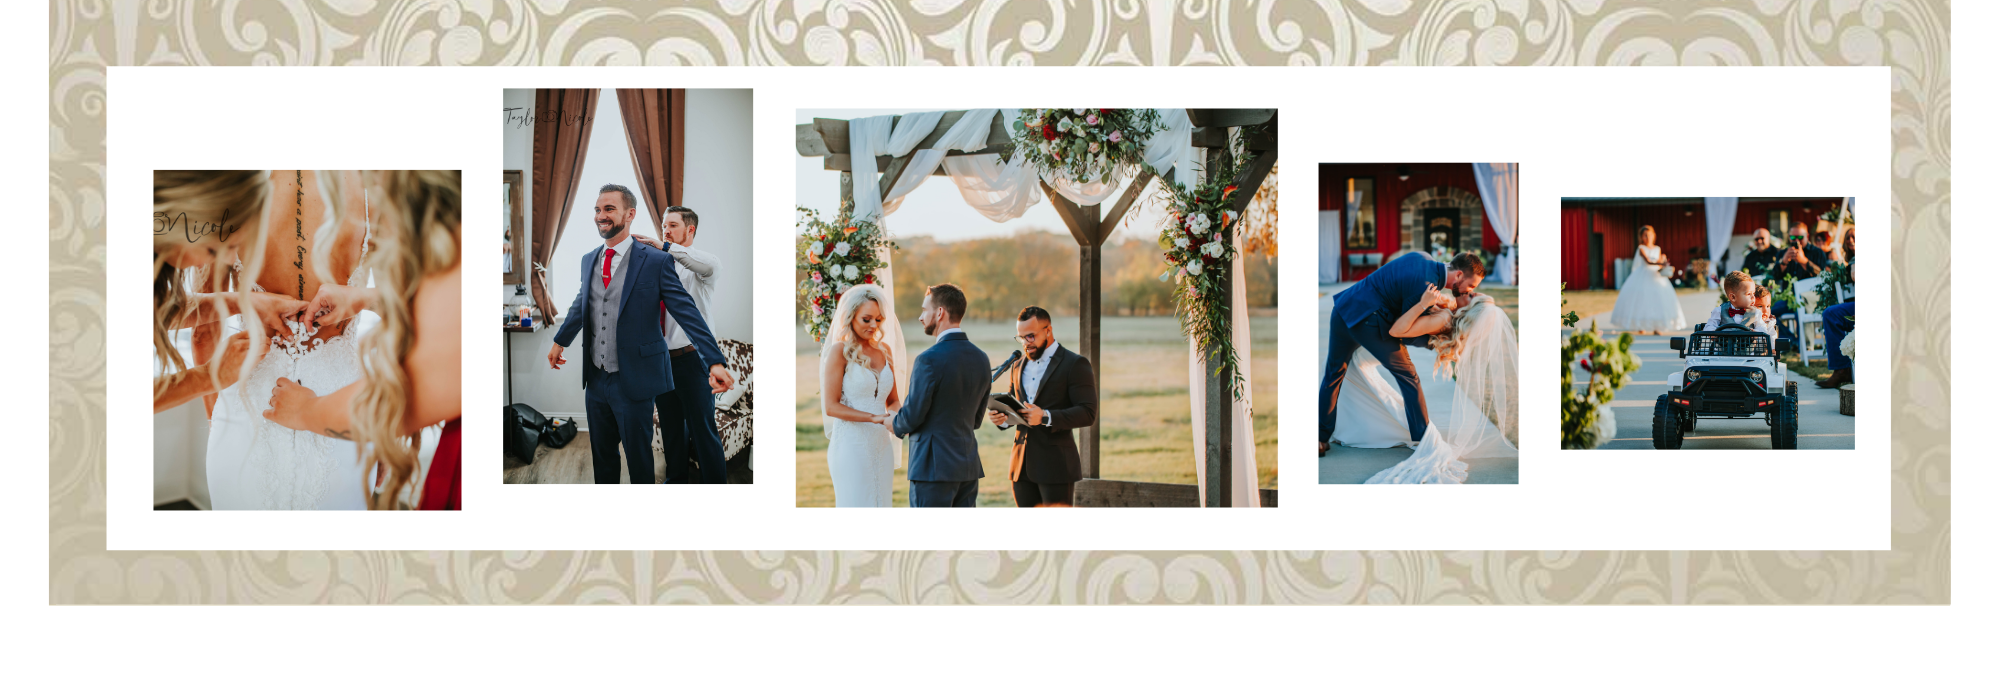 wedding collage 